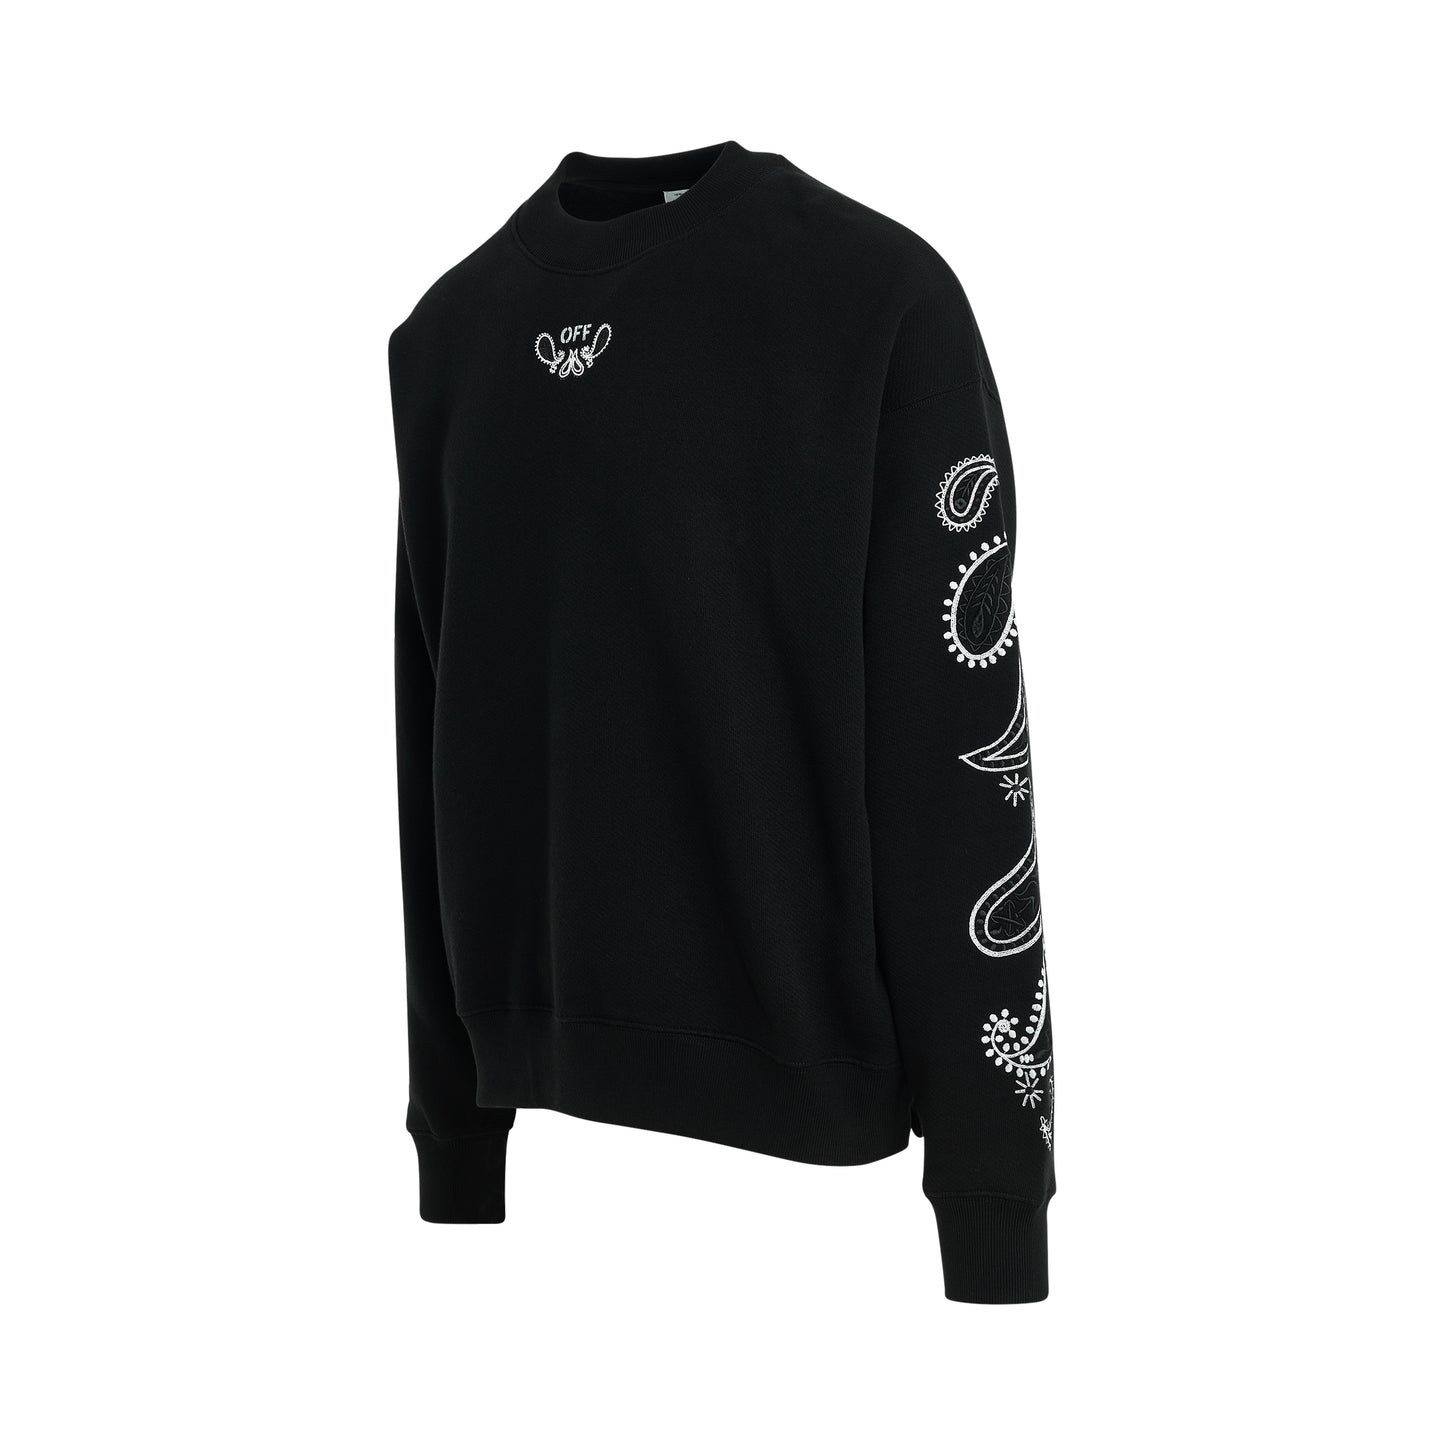 Bandana Arrow Skate Sweatshirt in Black/White